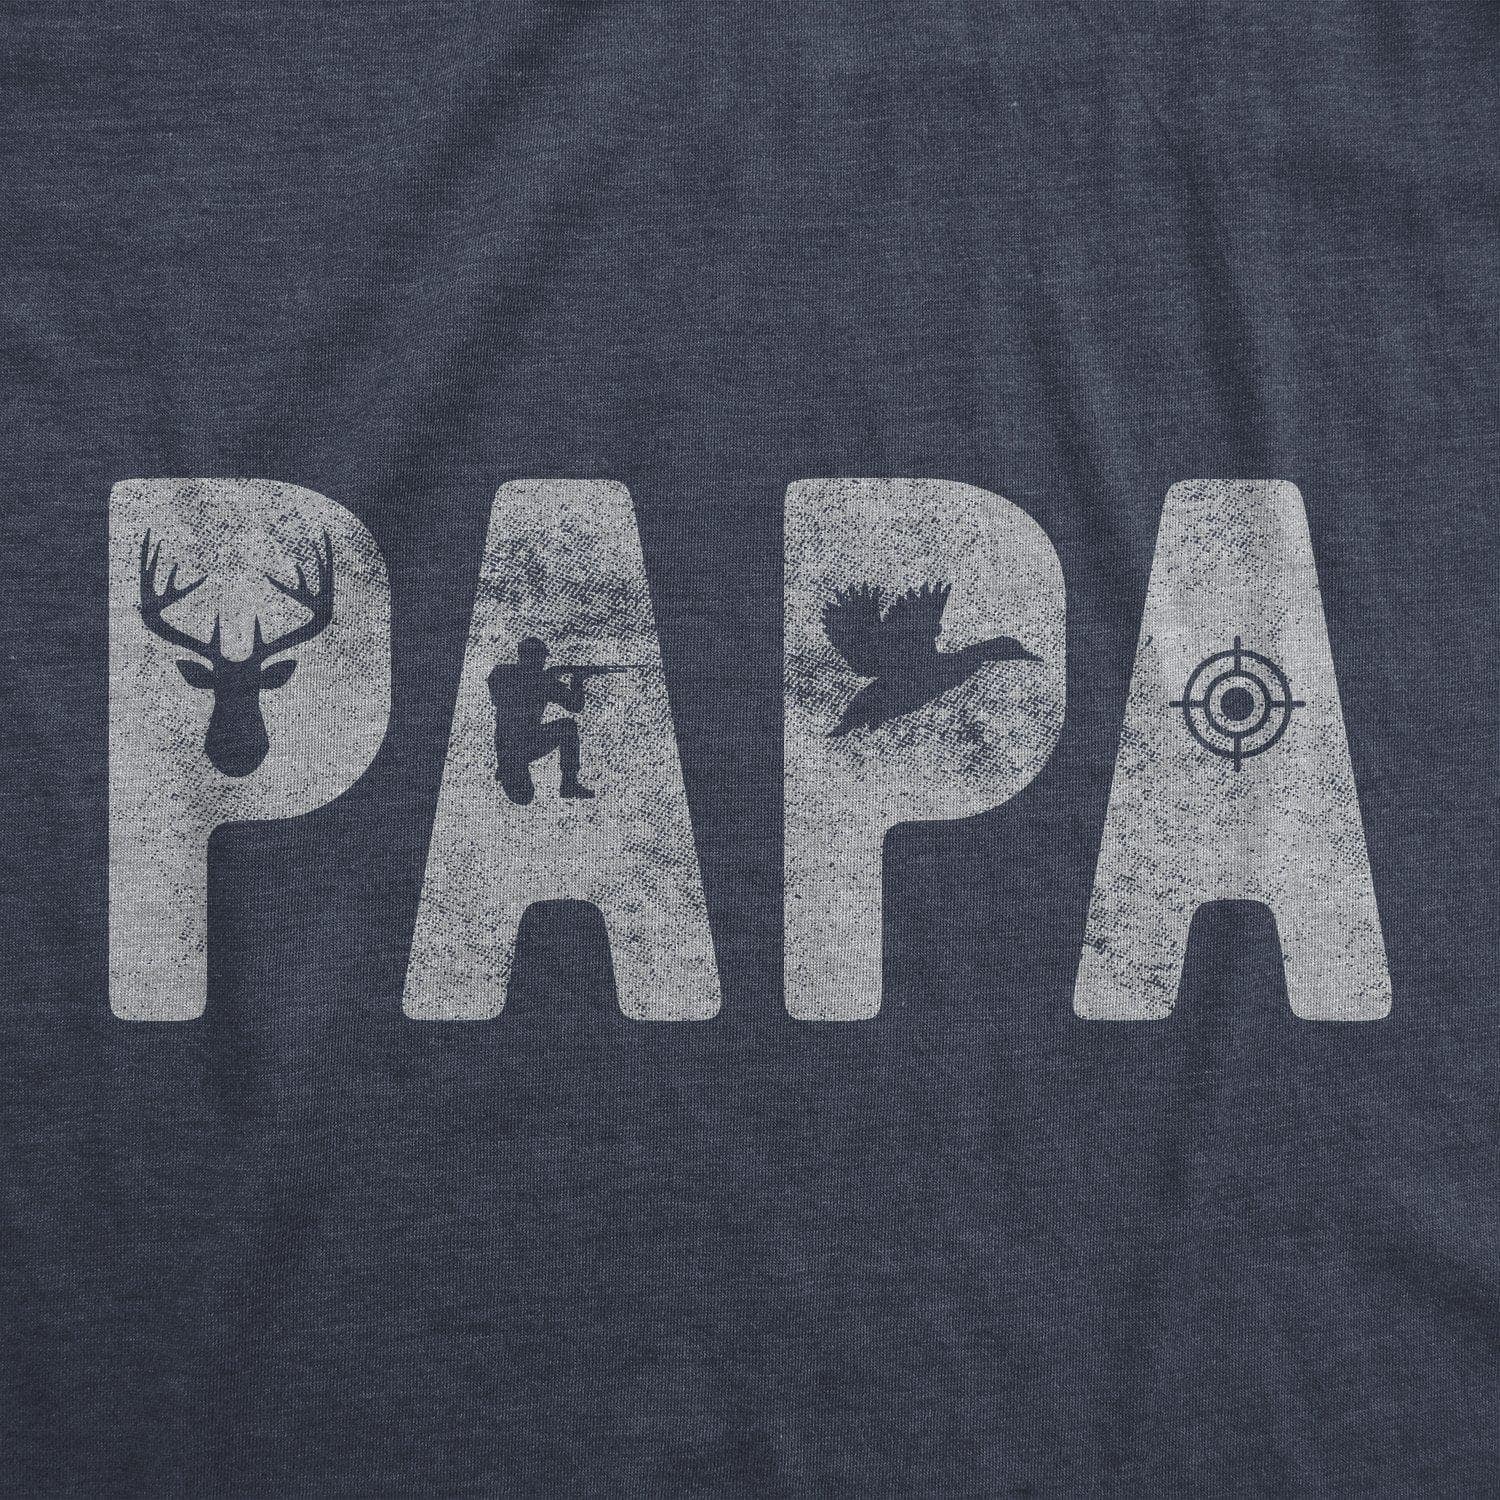 Papa Hunting Men's Tshirt - Crazy Dog T-Shirts